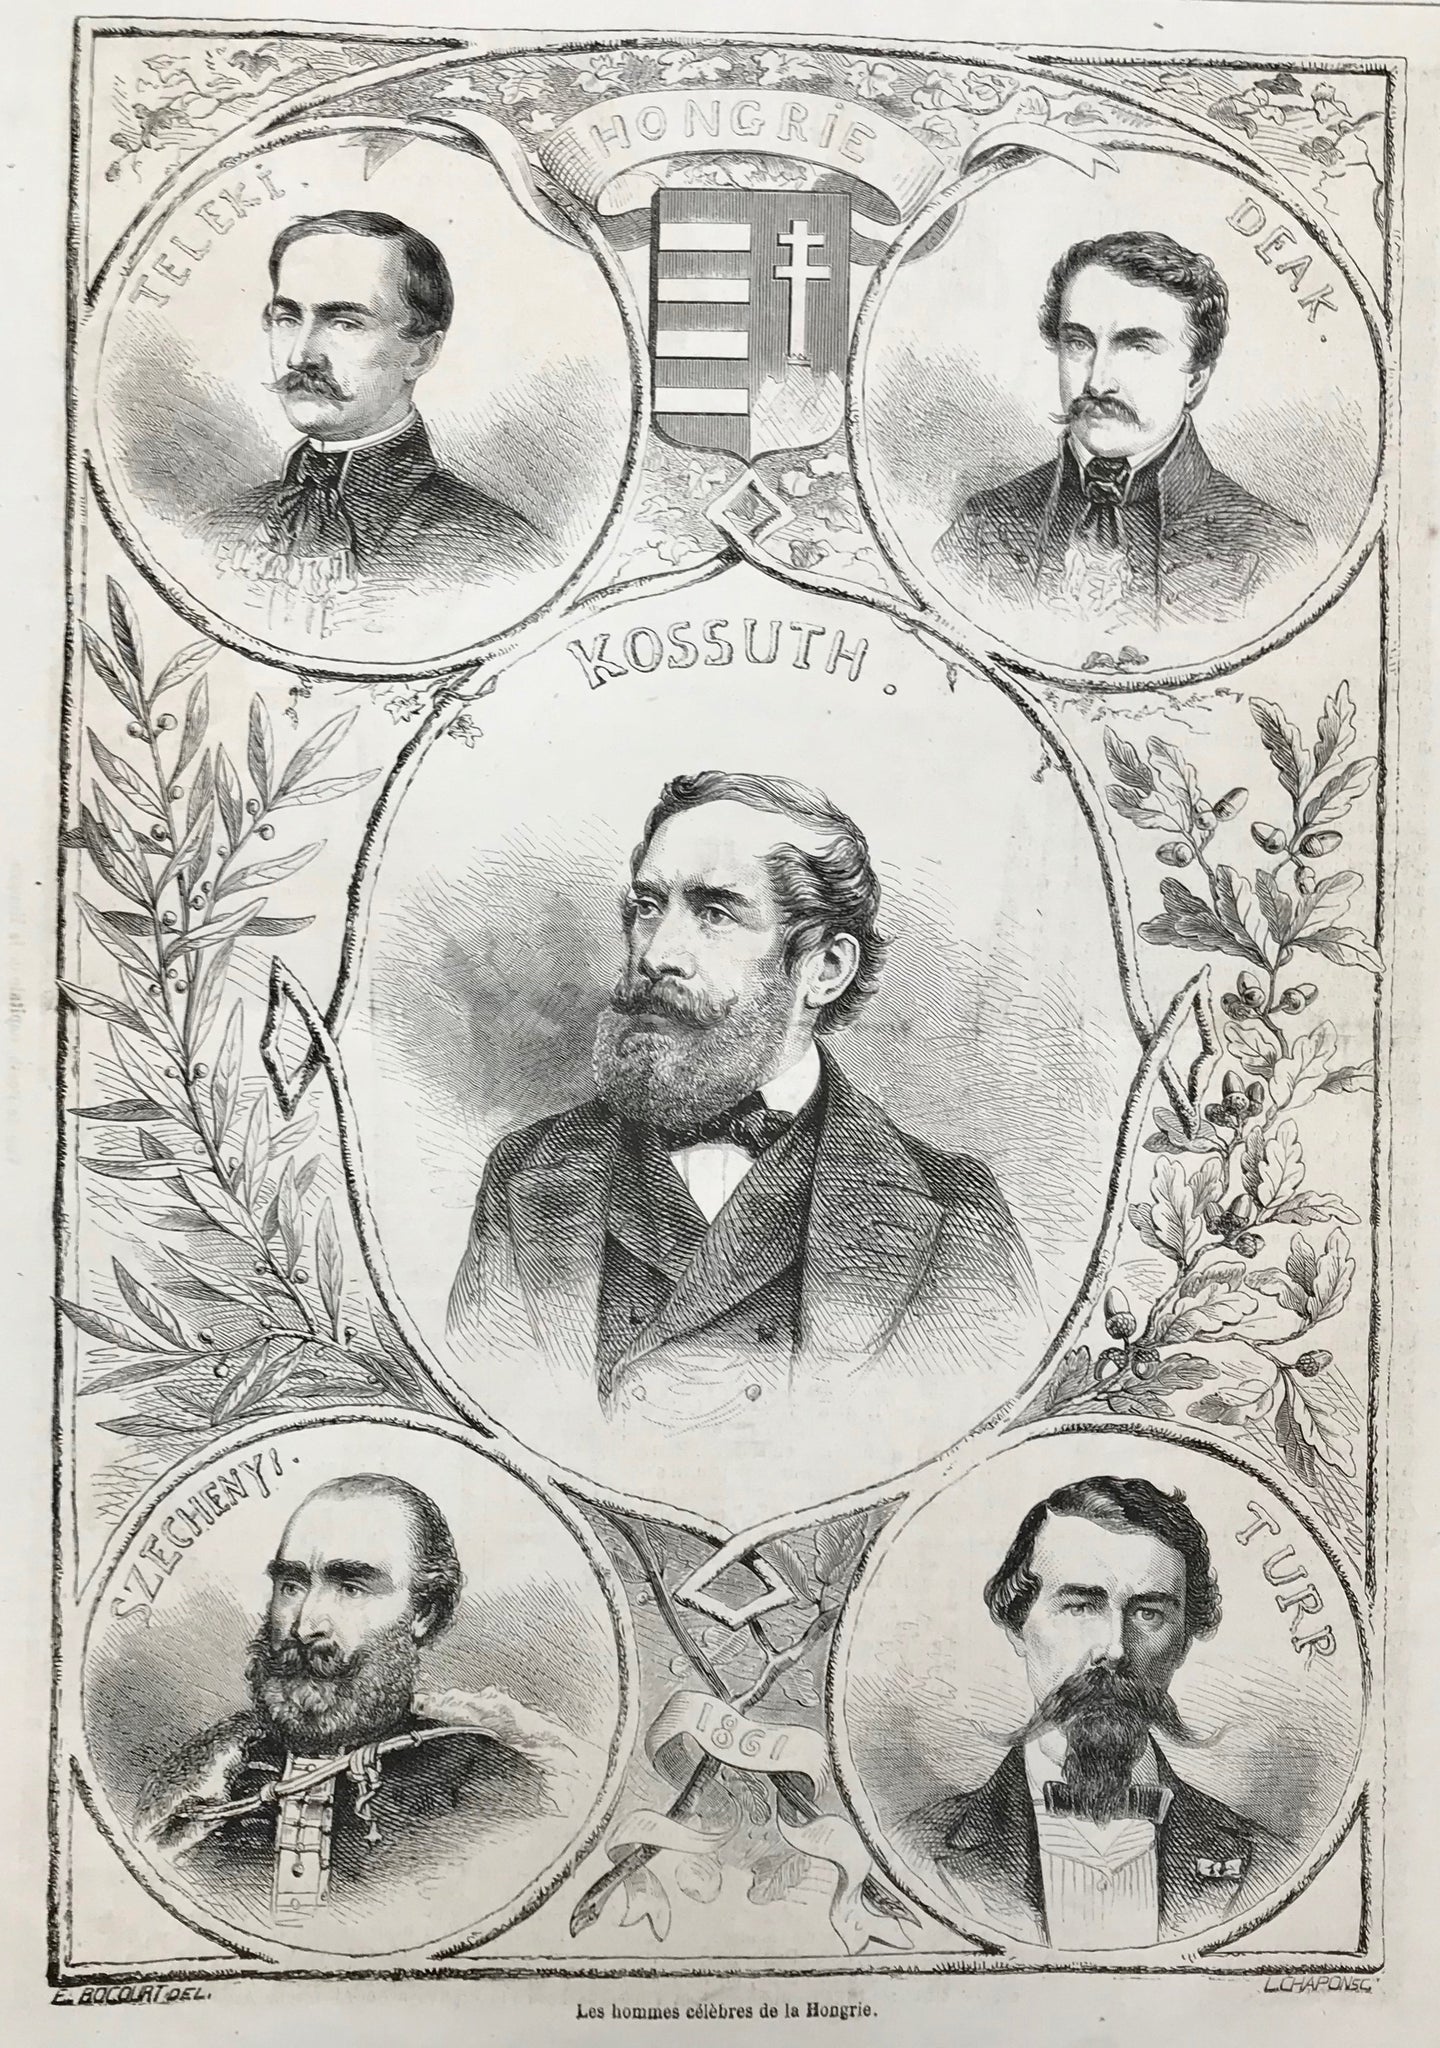 Hungary: "Les hommes celebres de la Hongrie"  Teleki, Deak, Kossuth, Szecheny, Turr  Wood engraving by L. chapon after E. Bocourt ca 1875. Reverse side is printed.